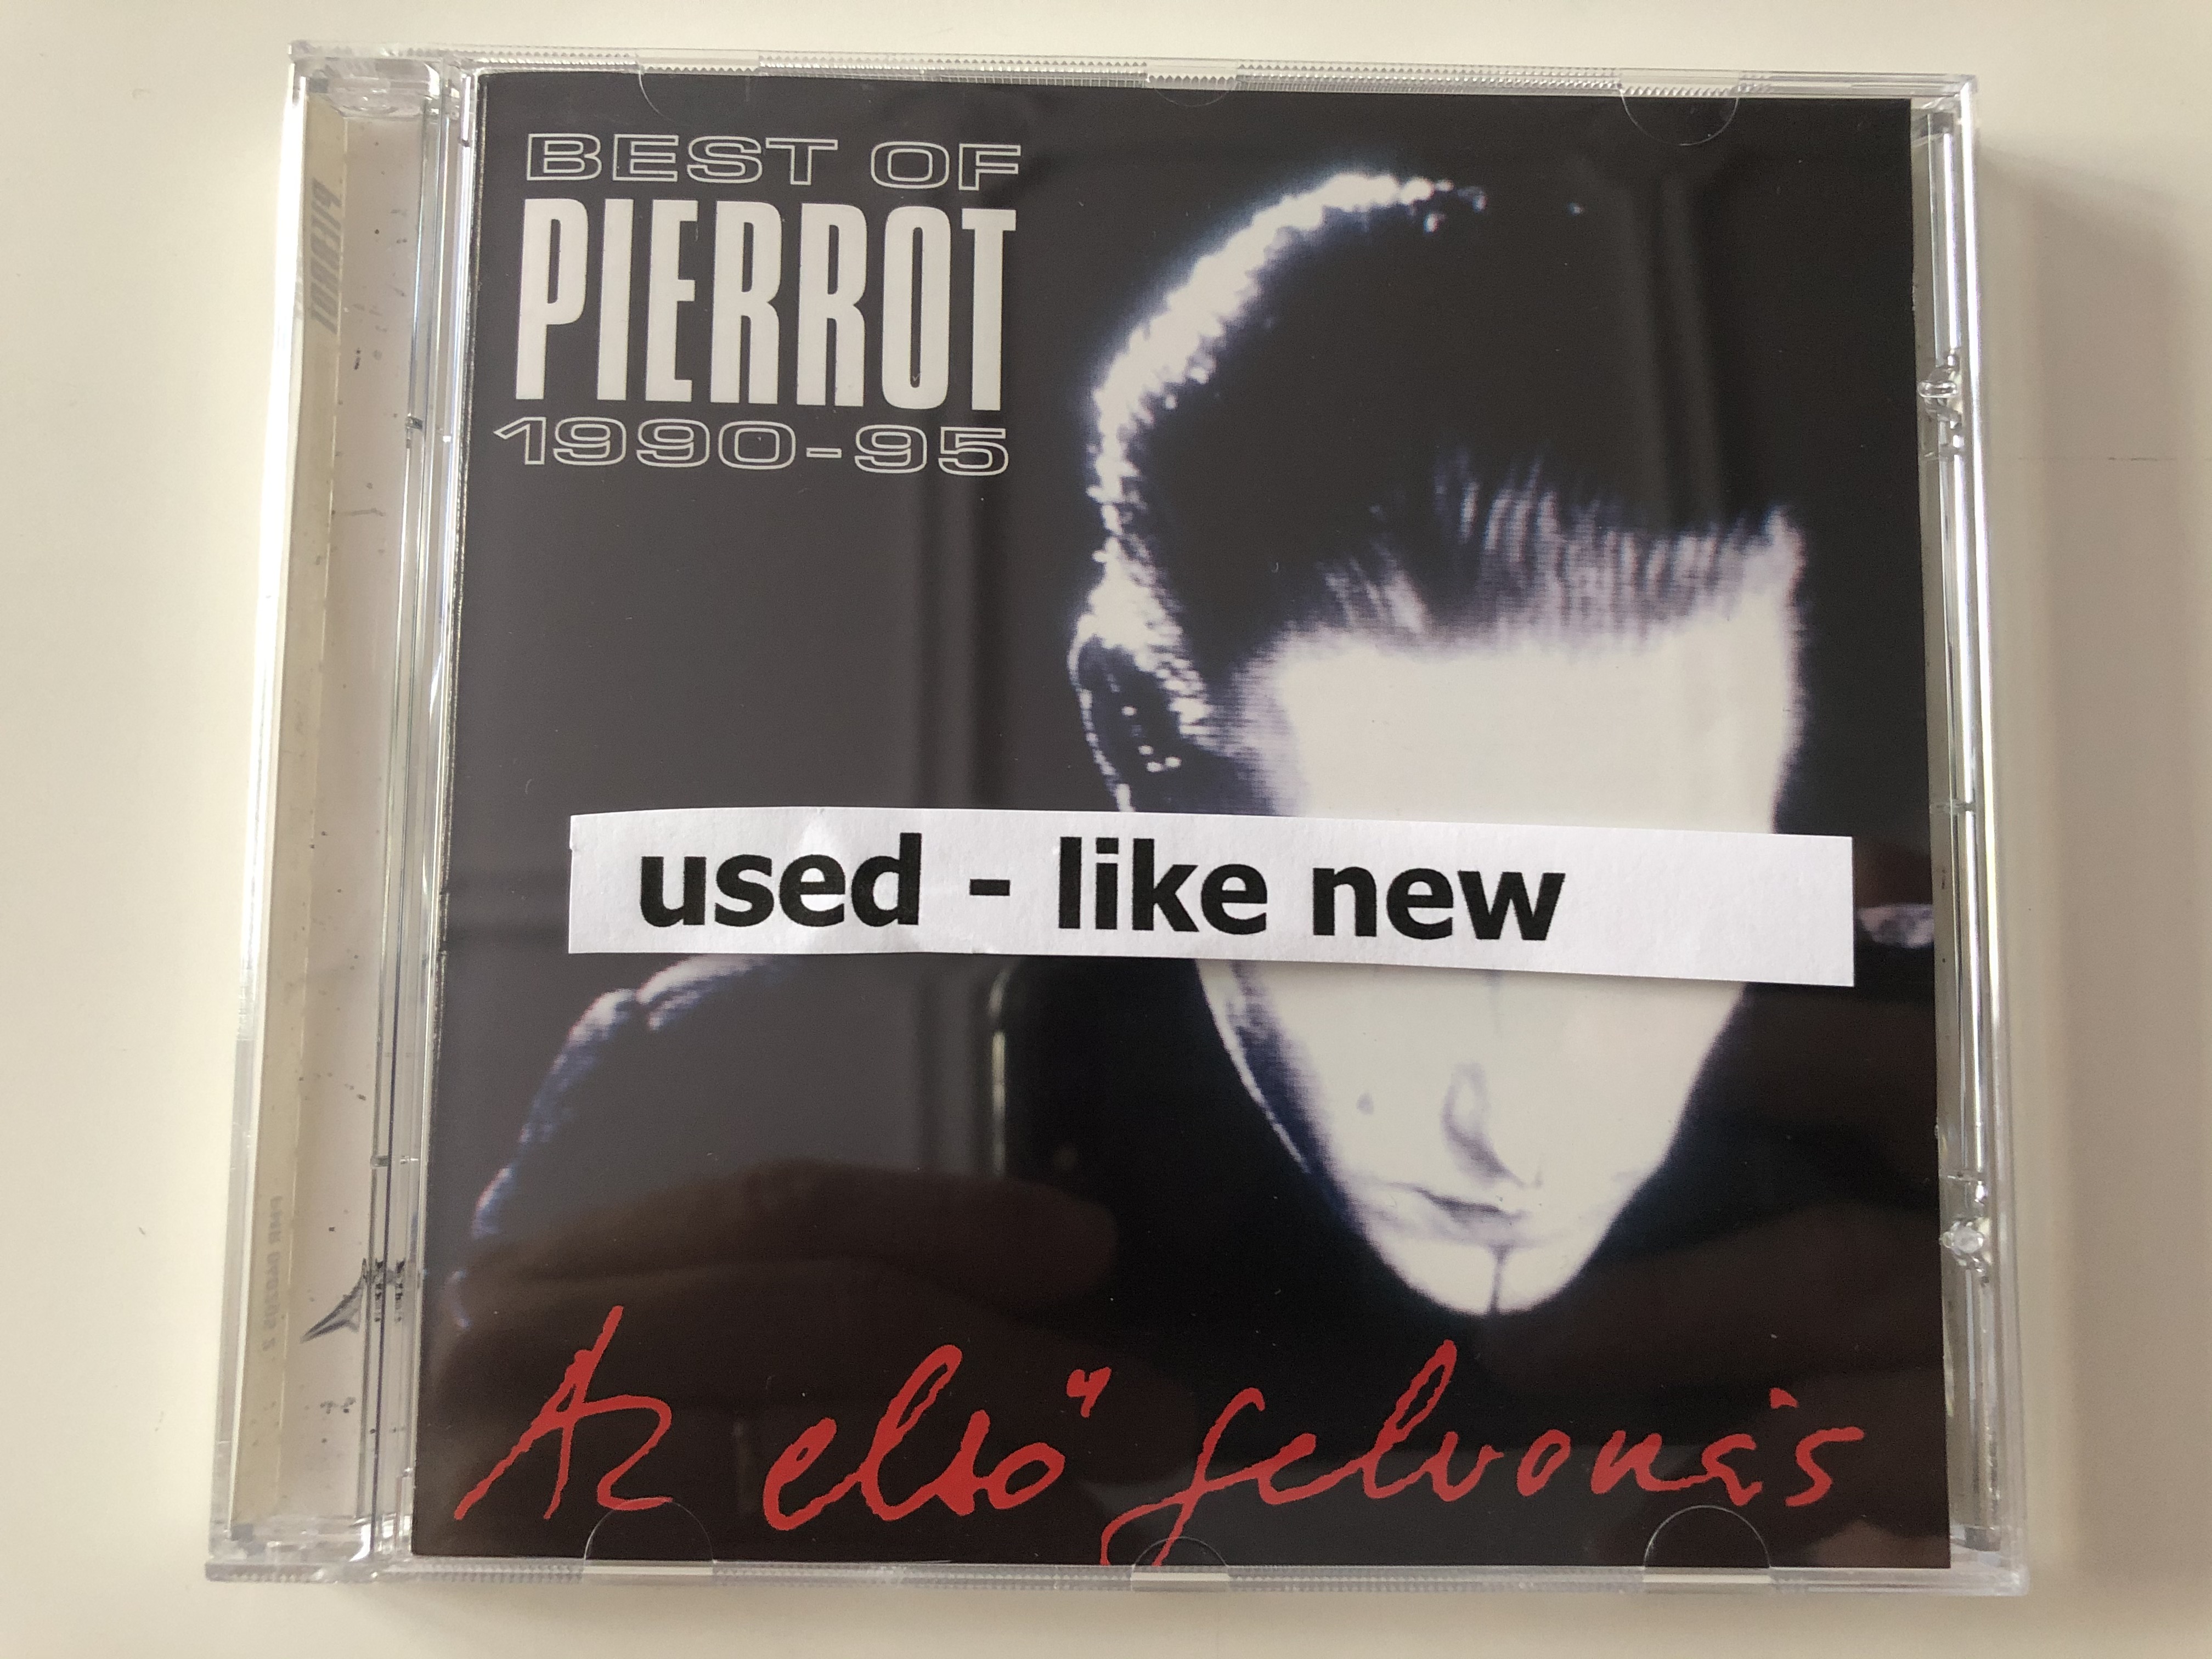 best-of-pierrot-1990-95-az-els-felvon-s-private-moon-records-audio-cd-2002-pmr-040205-2-7-.jpg